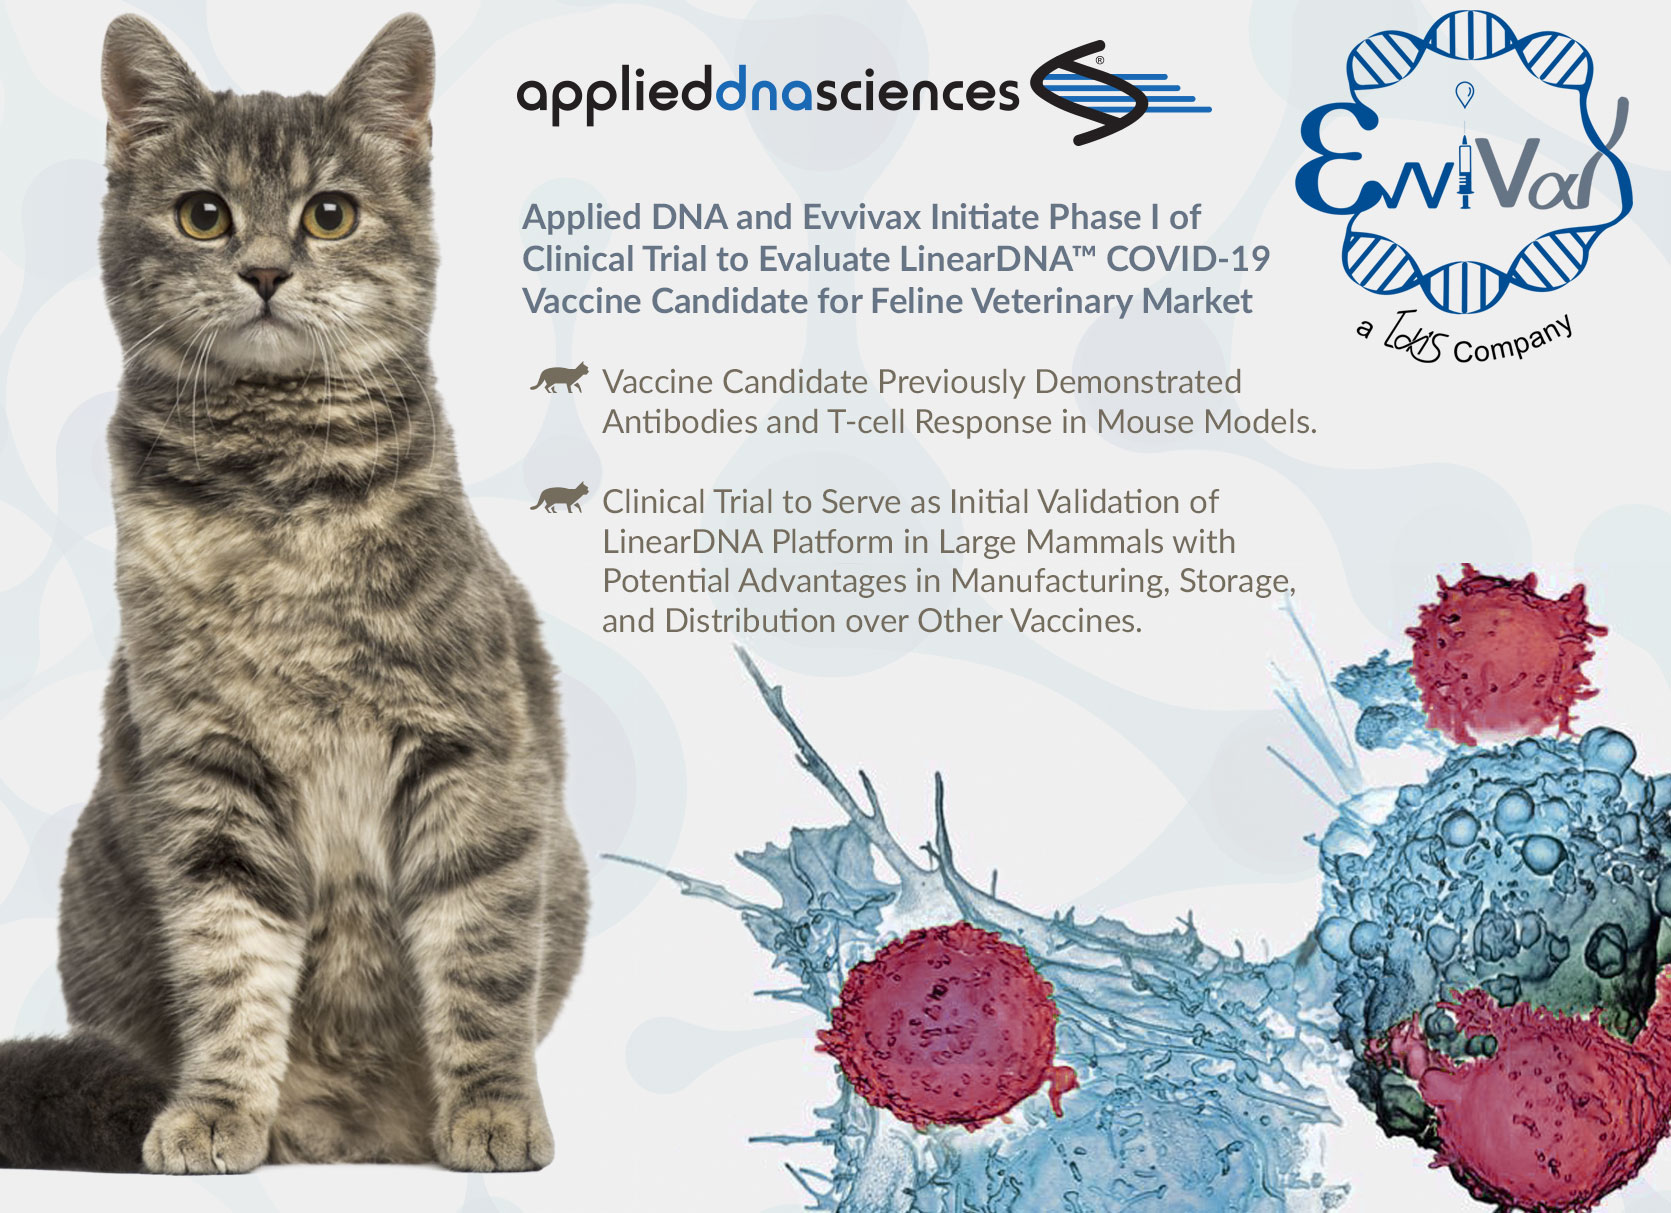 Applied DNA and Evvivax LinearDNA Covid 19 vaccine